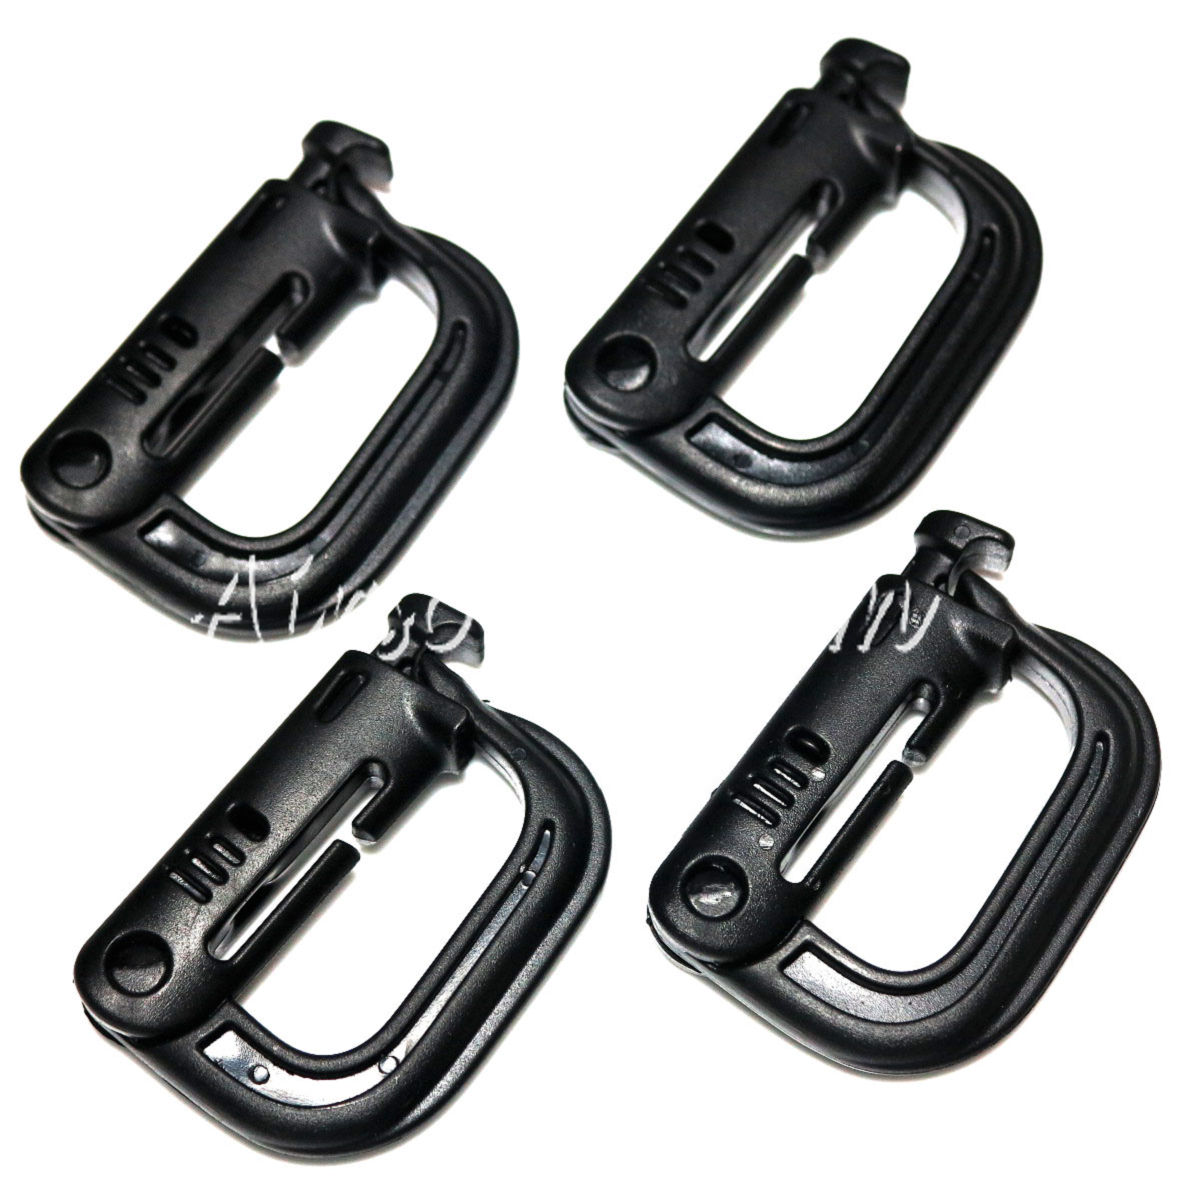 4pcs Pack Grimloc D-Ring Locking Molle Carabiner Black